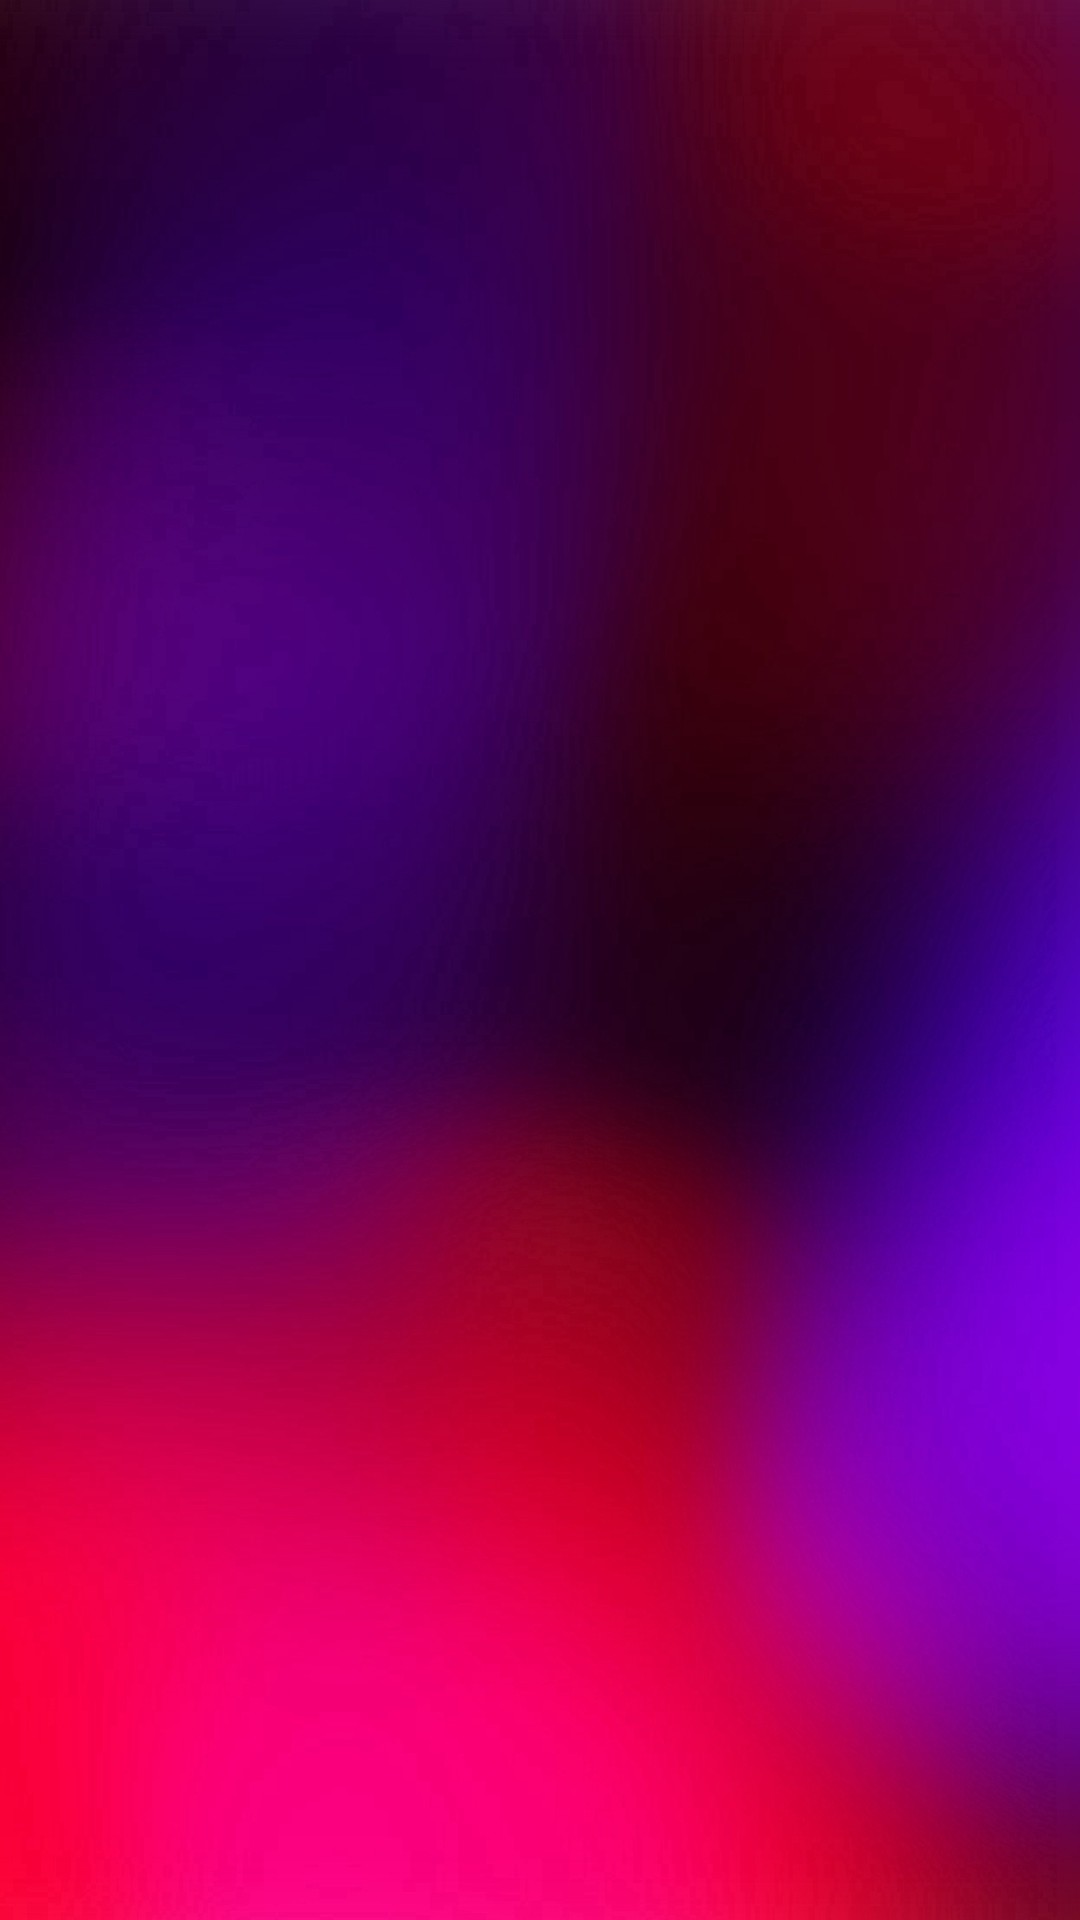 1080x1920 Purple Red Party Blur Gradation iPhone 8 wallpaper